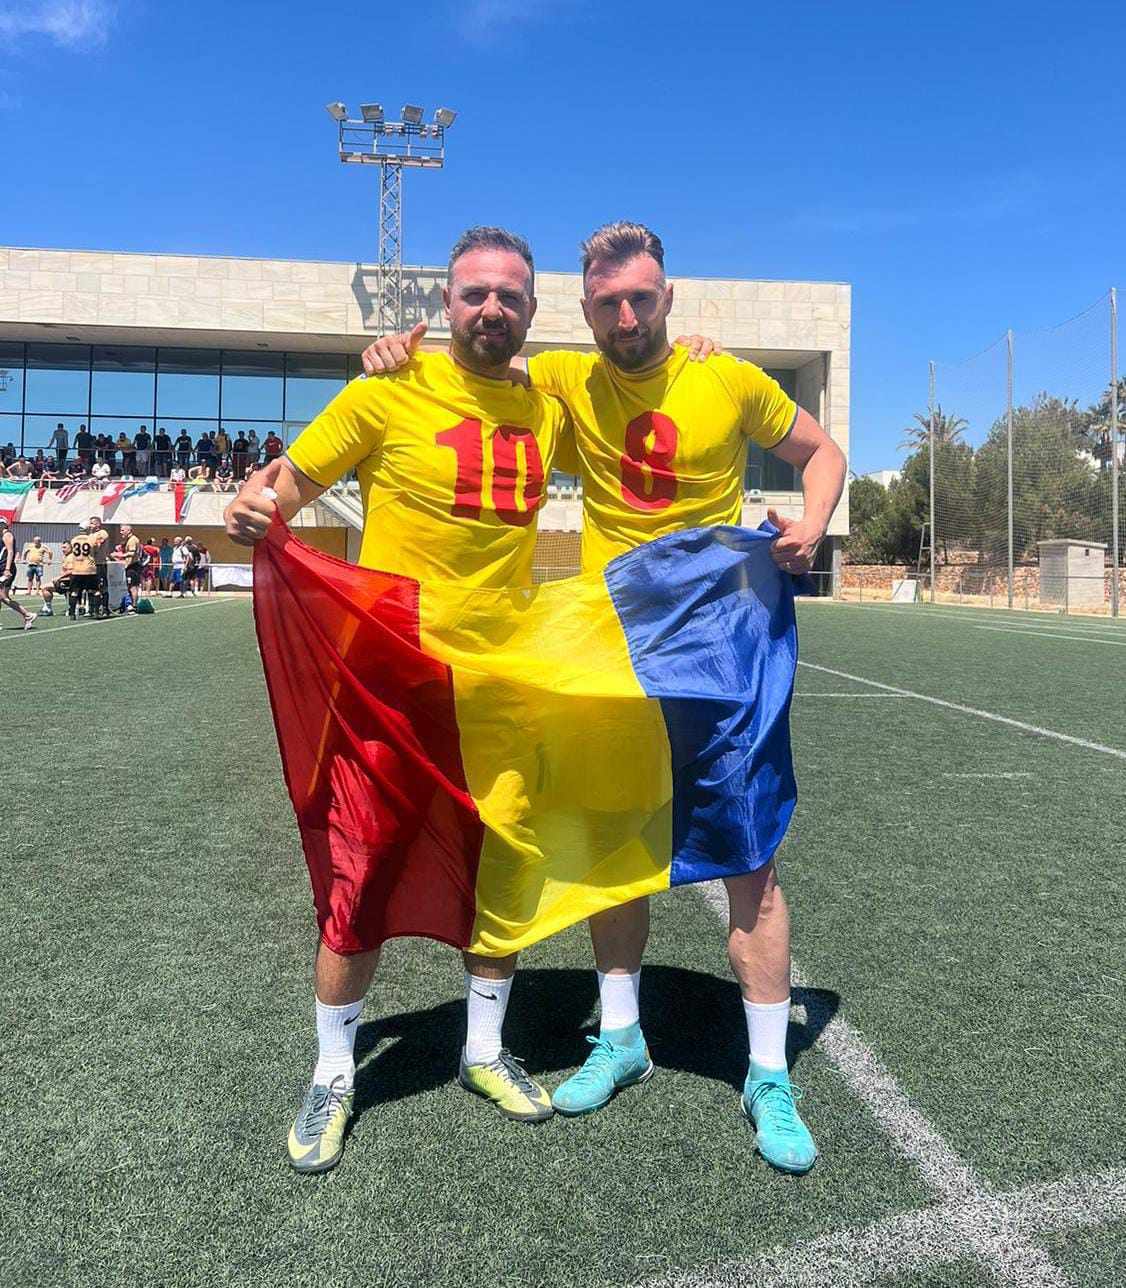 Formatia de fotbal IPA 1 Dolj a câştigat turneul mondial Copa del Mar, din Almería - Spania, la categoria Gold, +45!